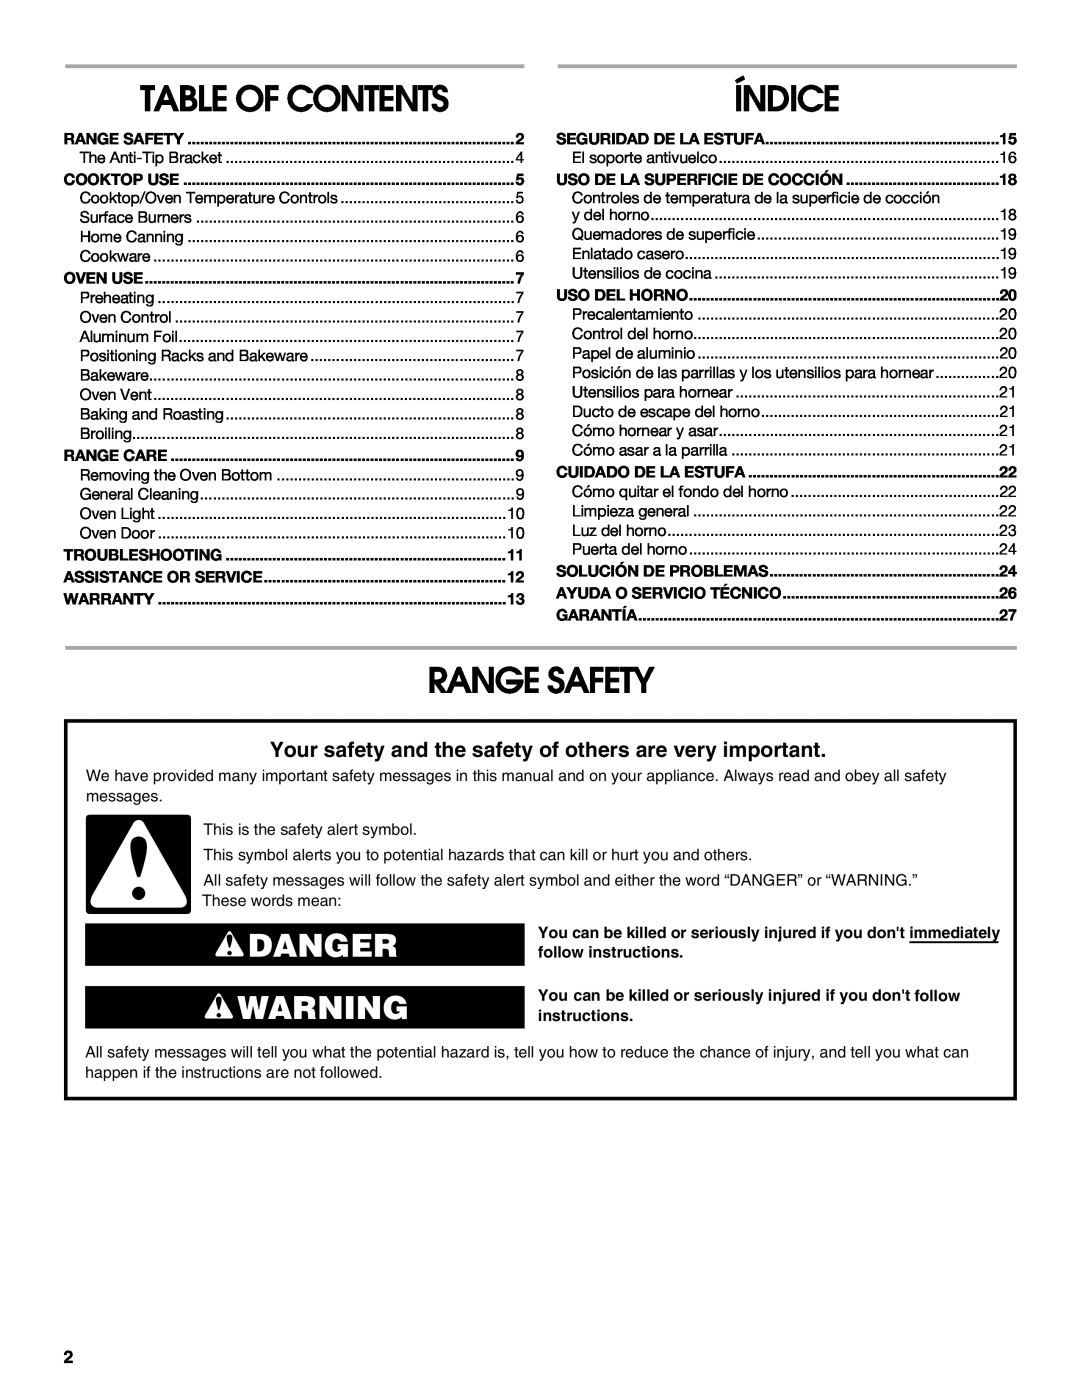 Estate W10173754A manual Table Of Contents, Range Safety, Índice, Danger 